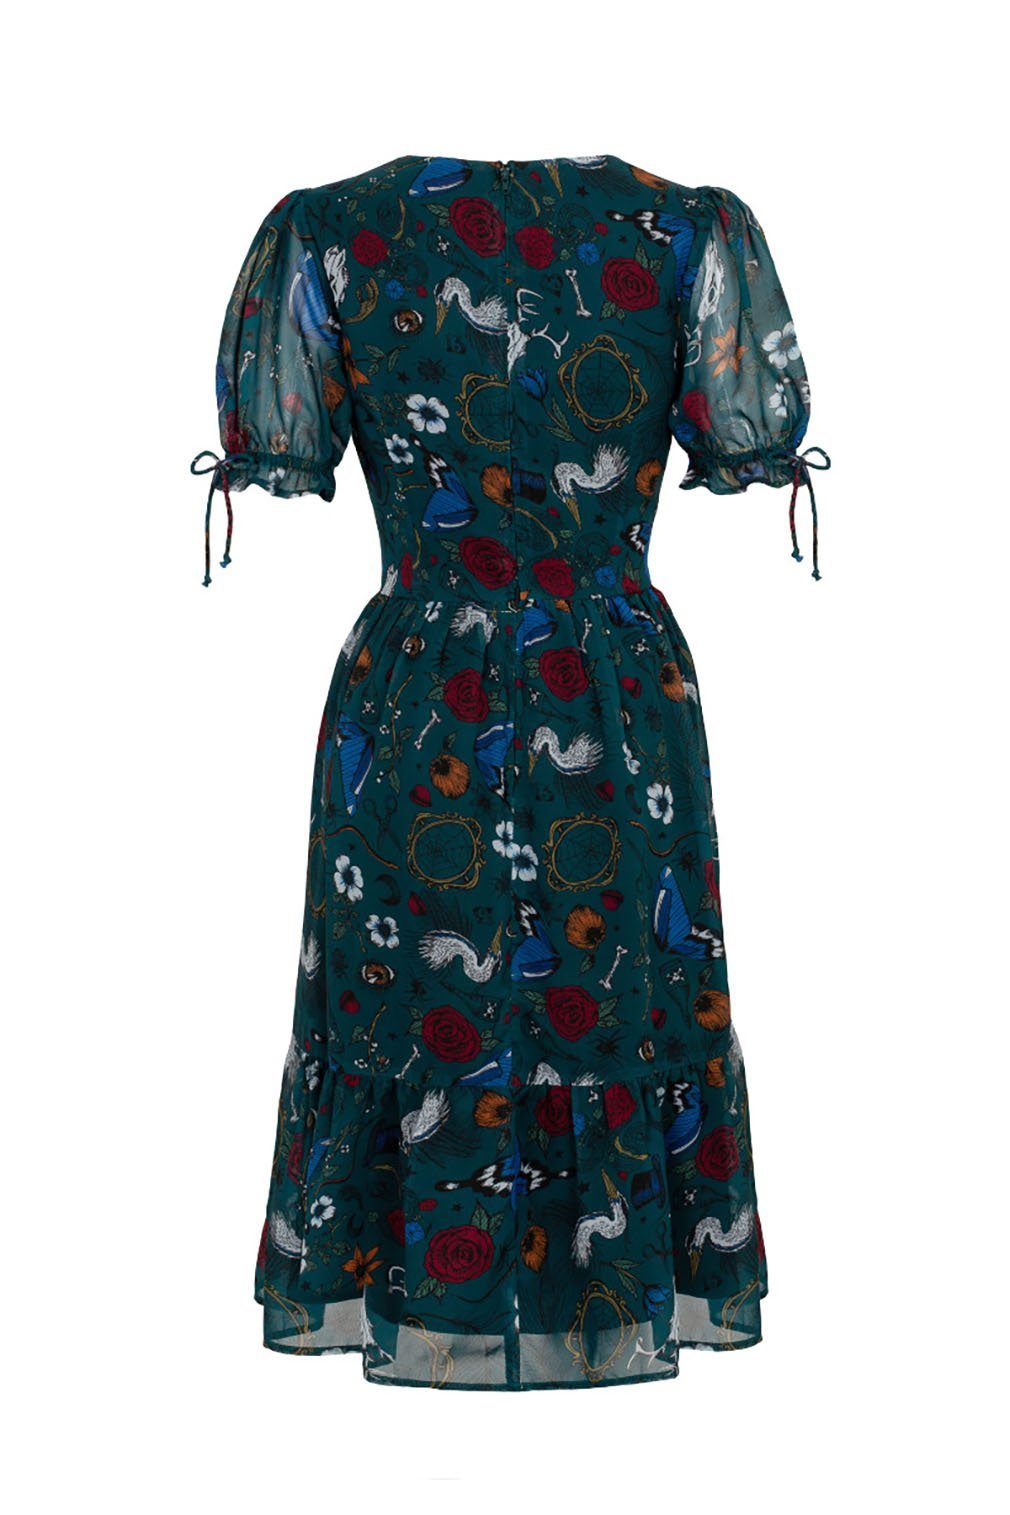 A-Linien-Kleid Dress Hell Teal Midi Bunny Vintage Retro Druck Blumen Sianna